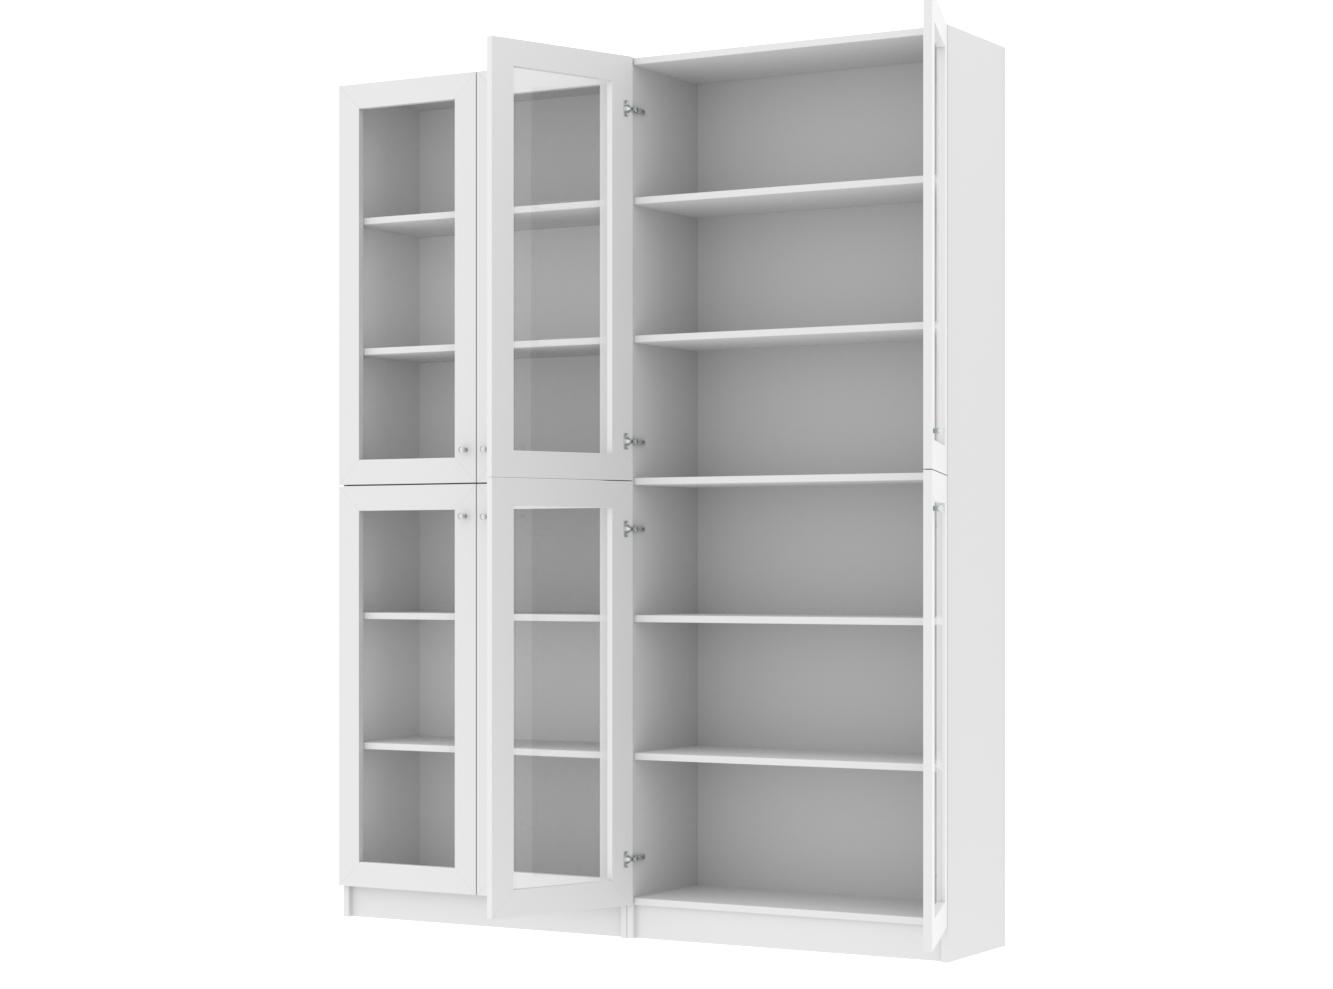  Книжный шкаф Билли 343 white ИКЕА (IKEA) изображение товара